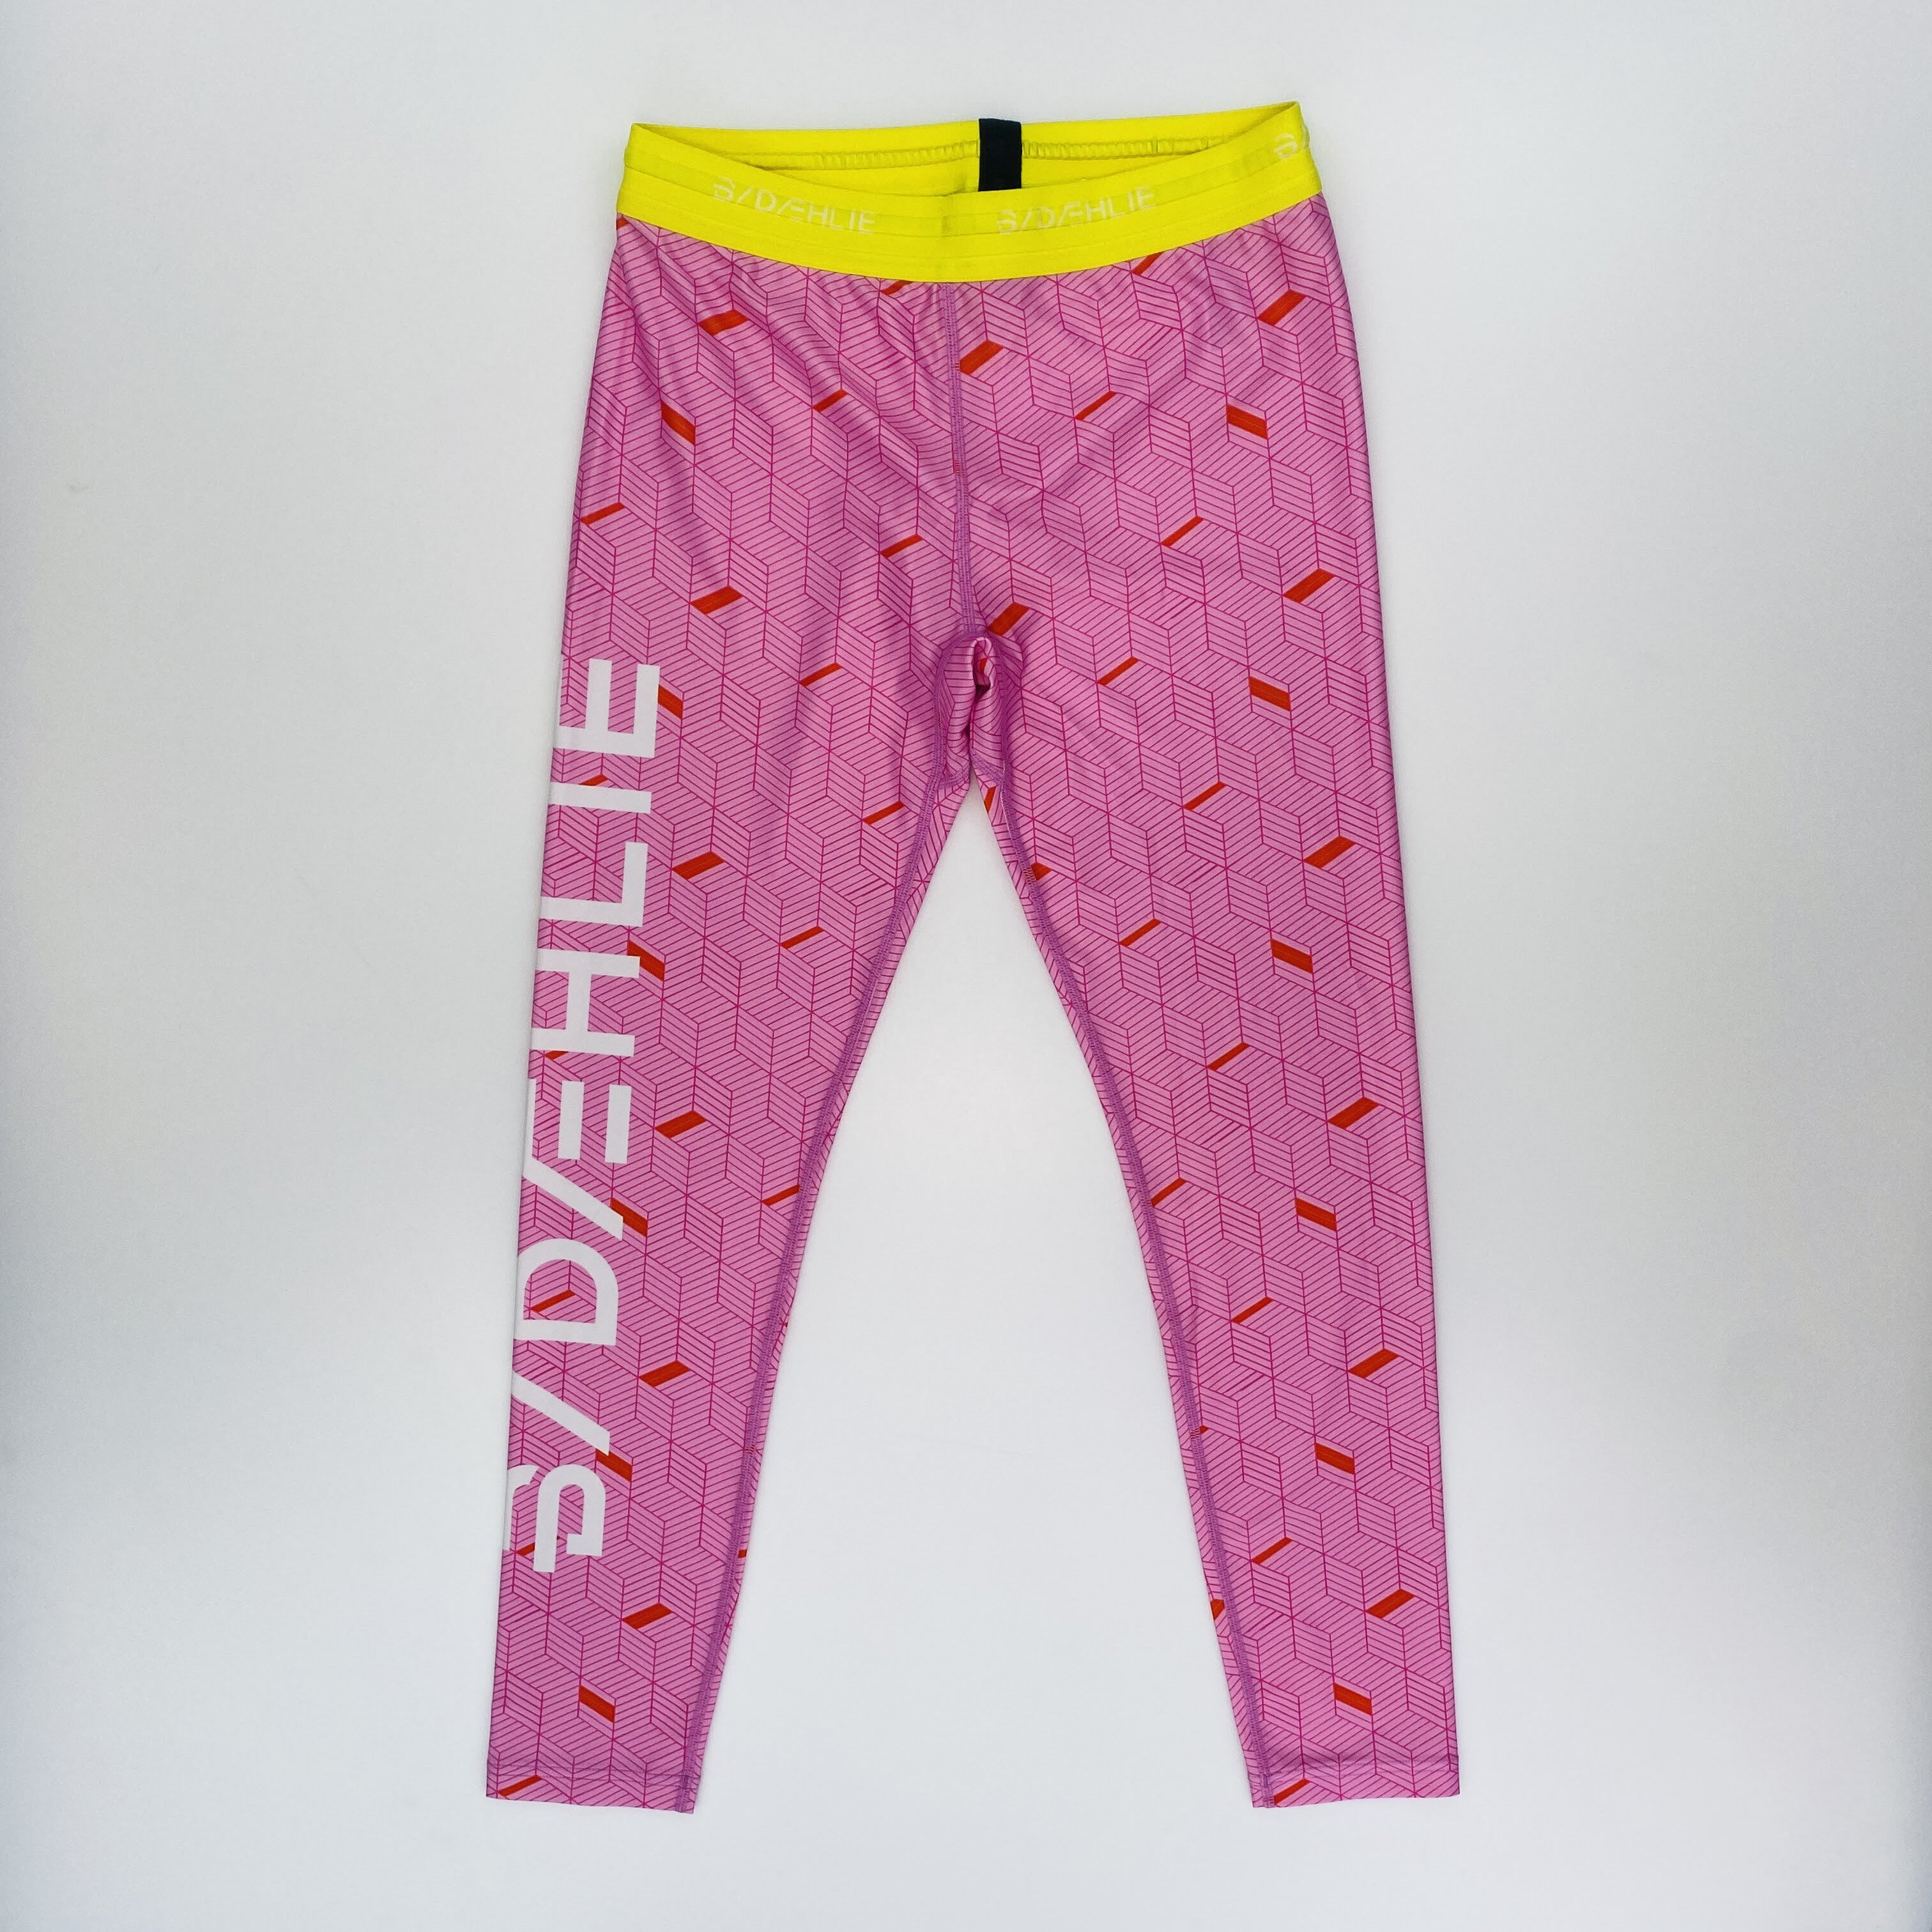 Daehlie Tights Intense Cropped Wmn - Second Hand Running leggings - Women's - Pink - M | Hardloop